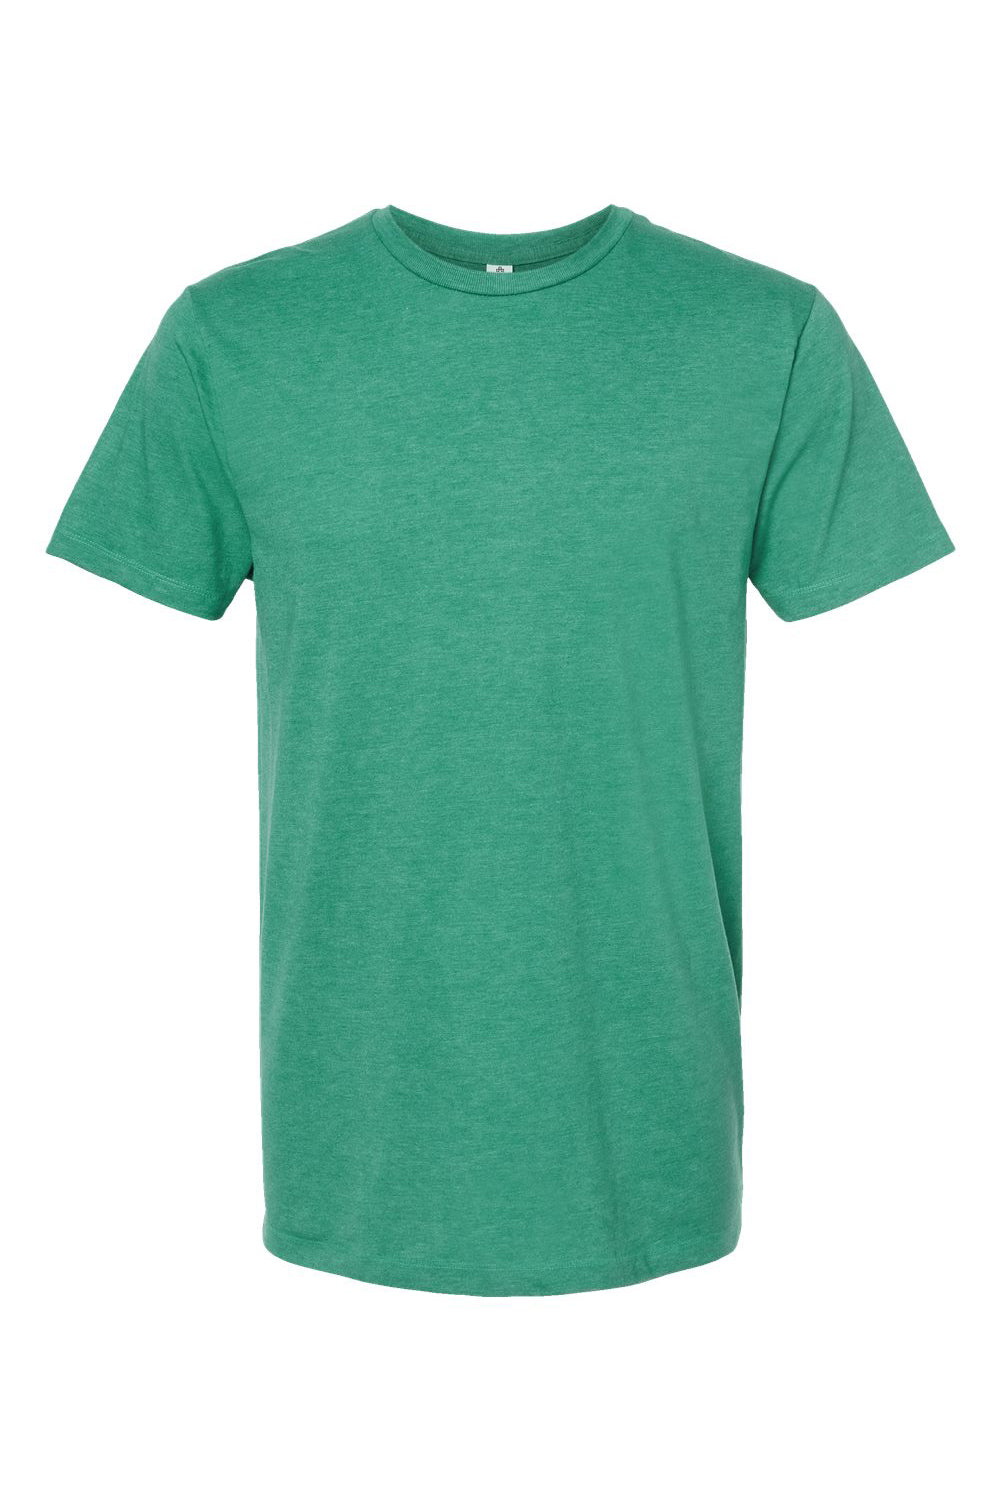 Tultex 541 Mens Premium Short Sleeve Crewneck T-Shirt Heather Kelly Green Flat Front